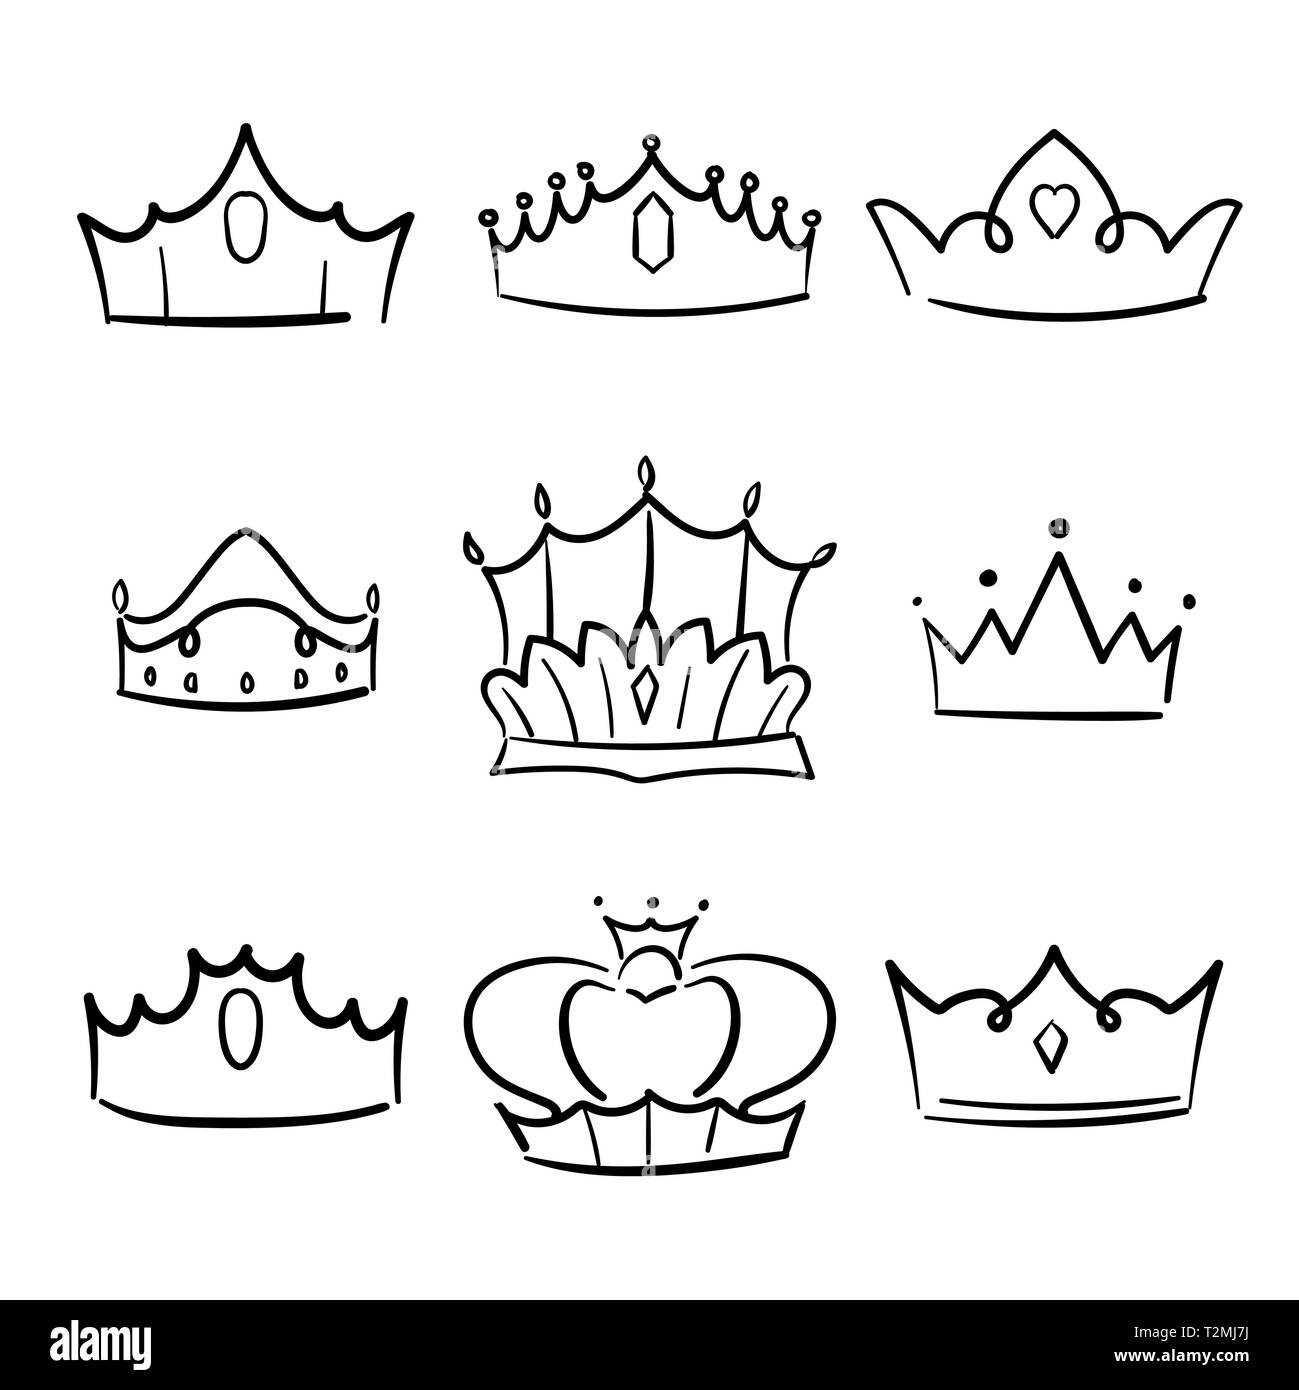 Queen crown drawing tattoo 1 jpg - Clipartix